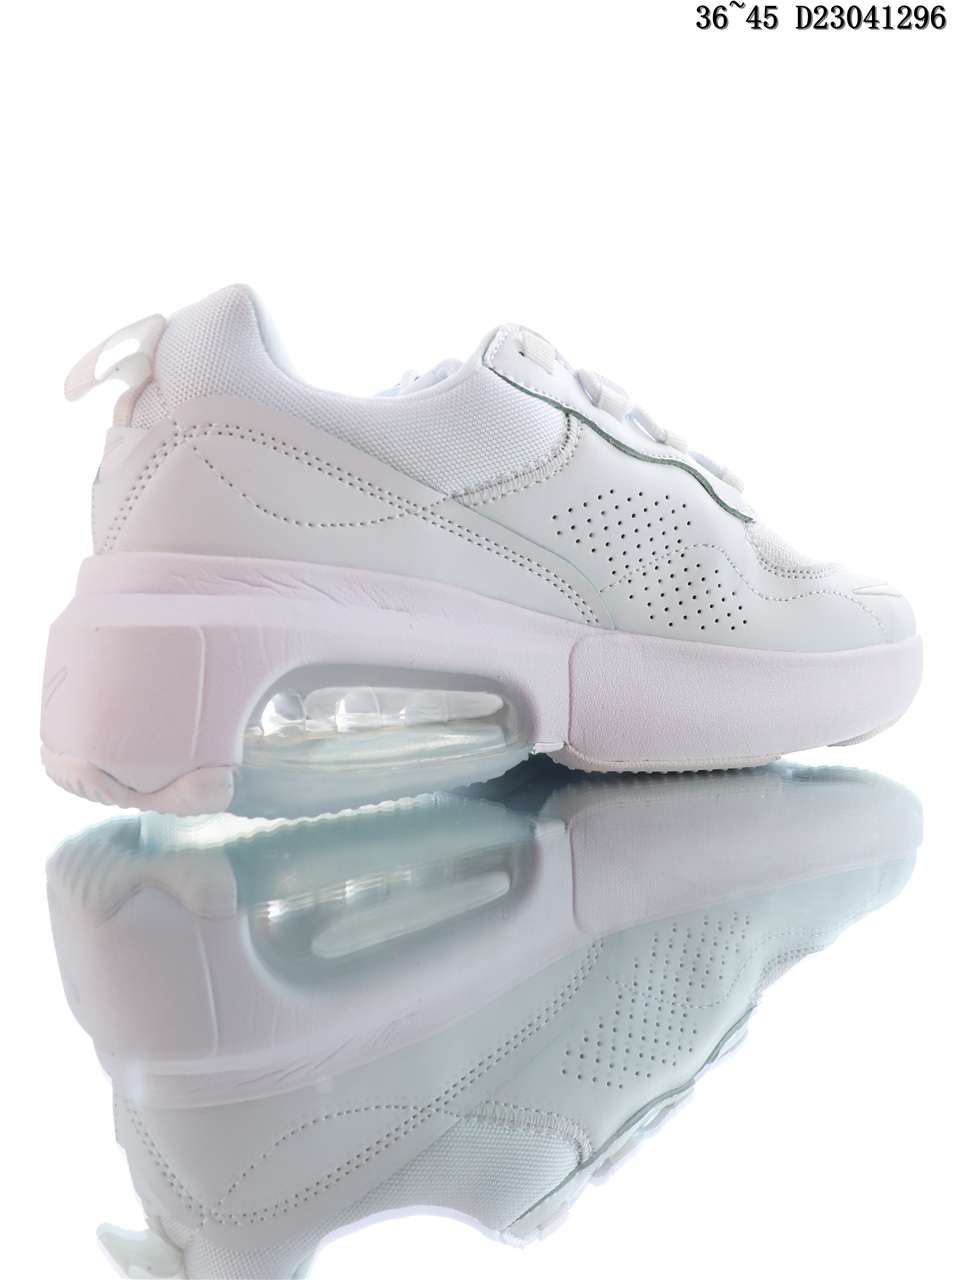 Nike Air Max Verona white cushioned running shoes buy